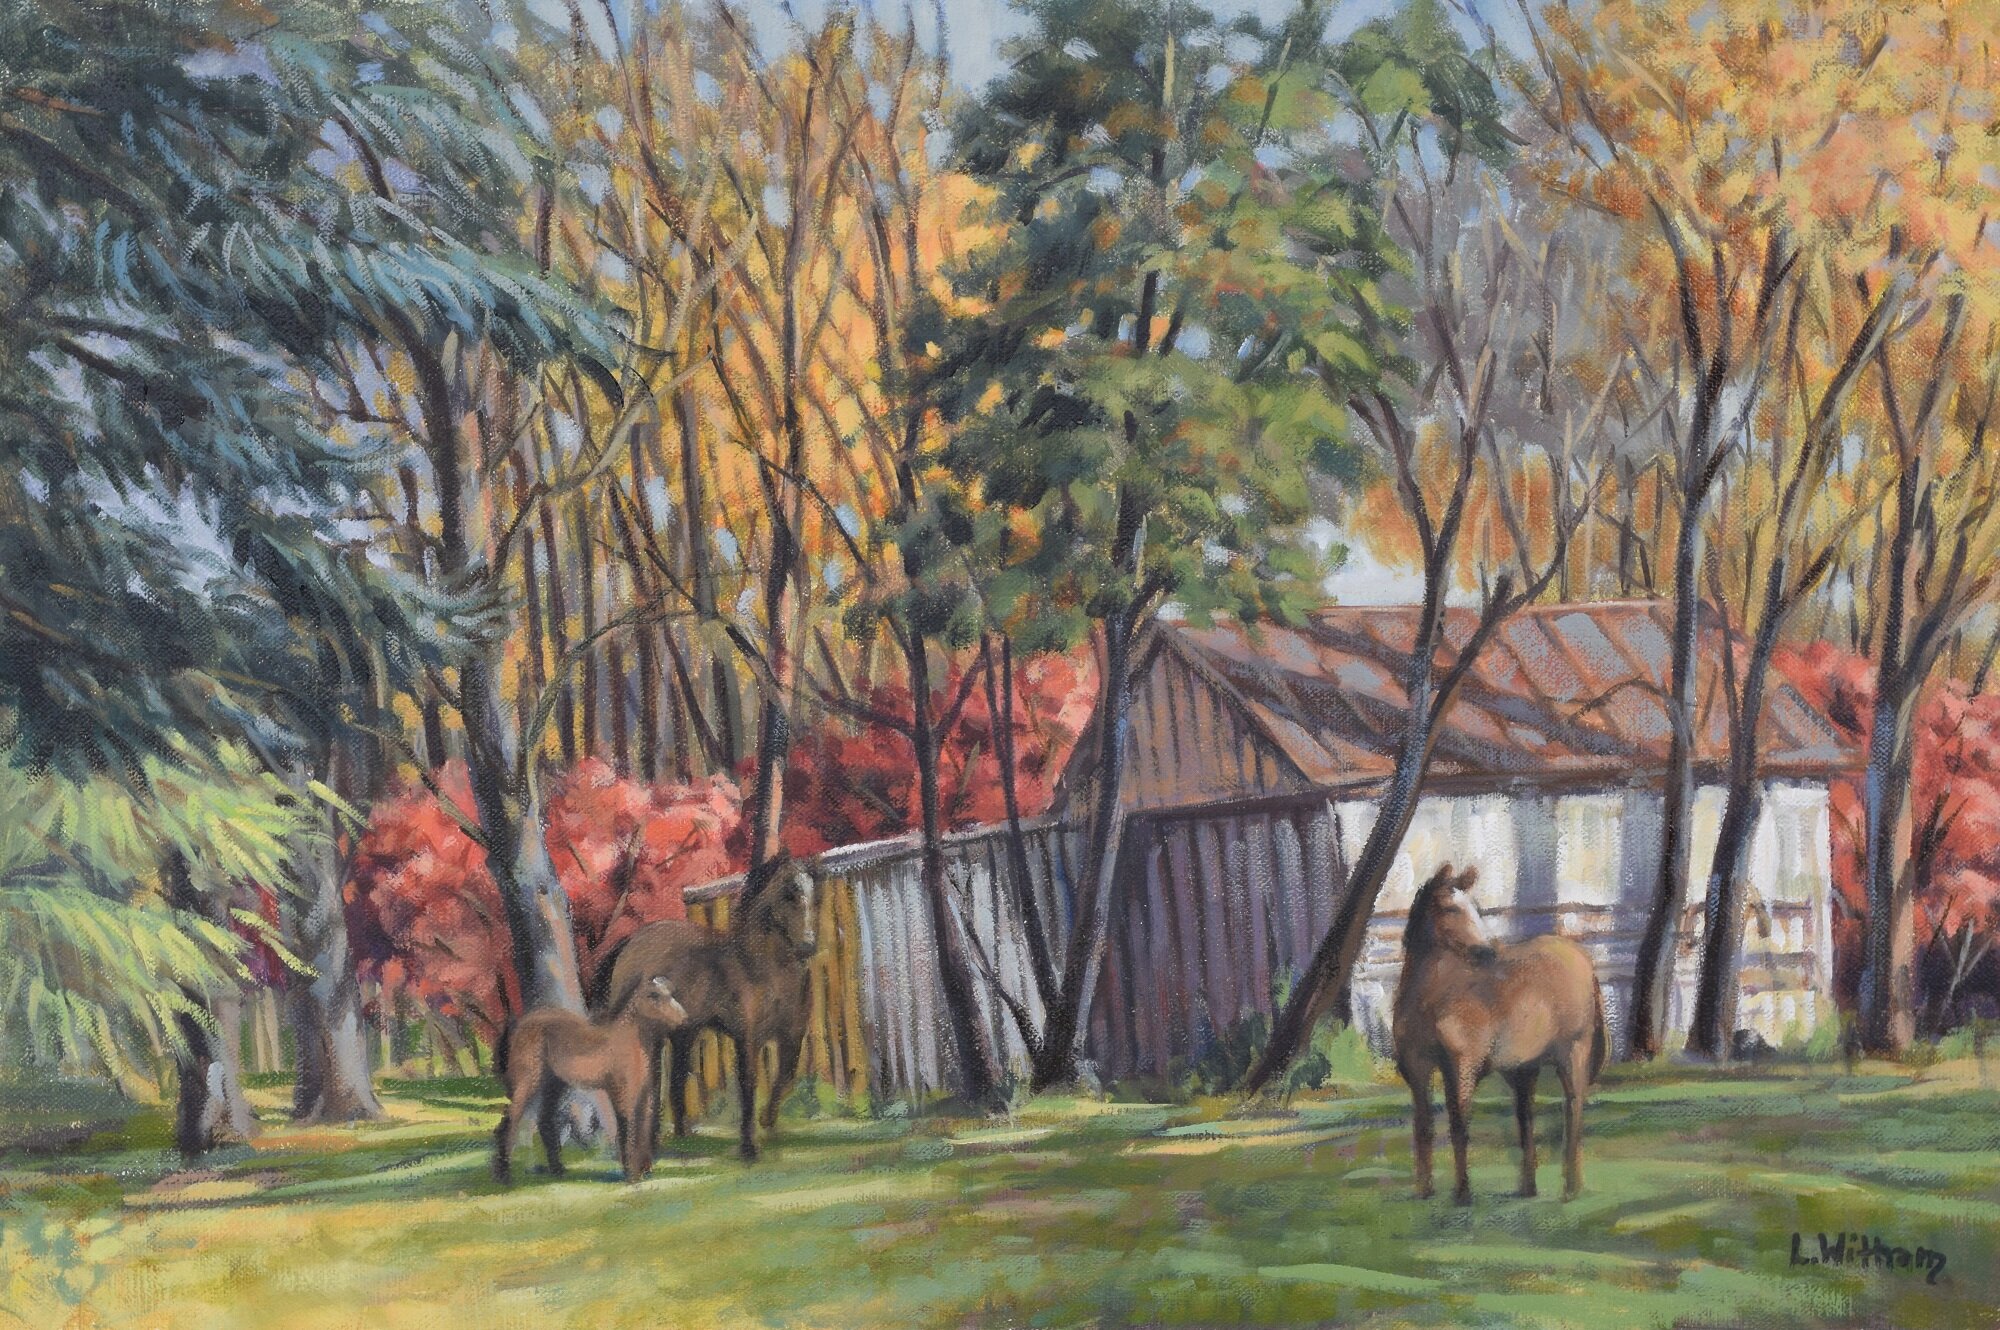 Horse Barns, Oil on linen, 12x18